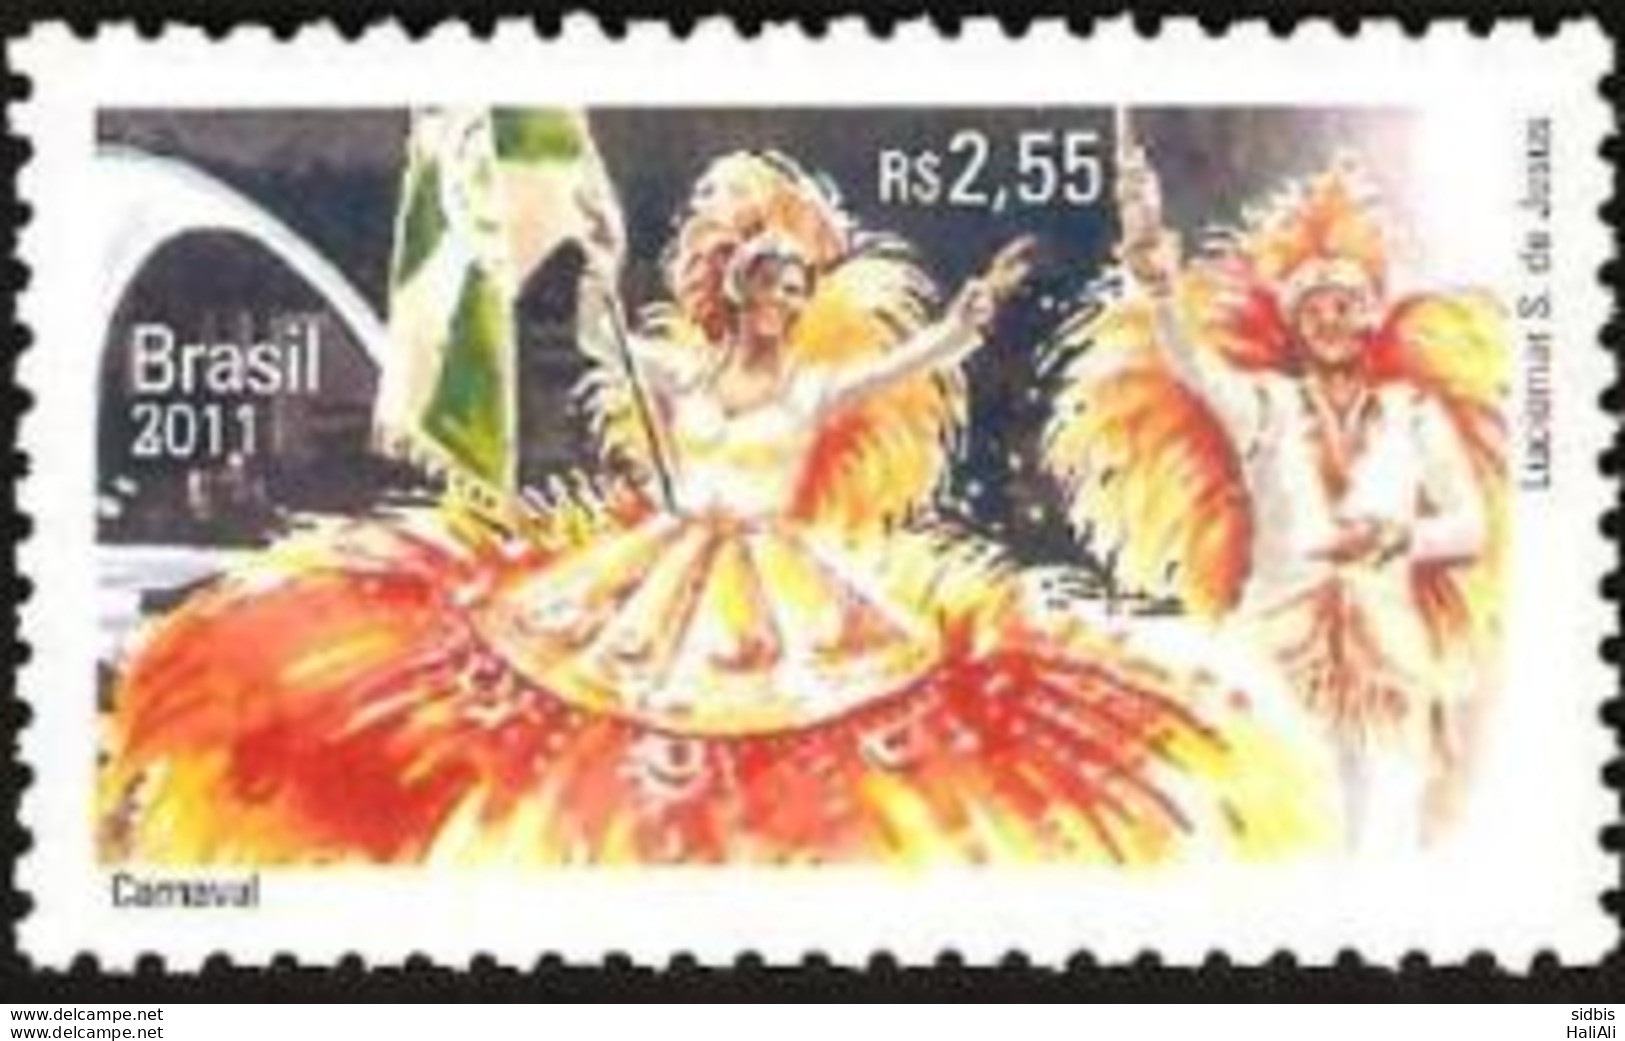 C 3150 Brazil Stamp Diplomatic Relations Belgium Carnival Arte Flag 2011 - Unused Stamps